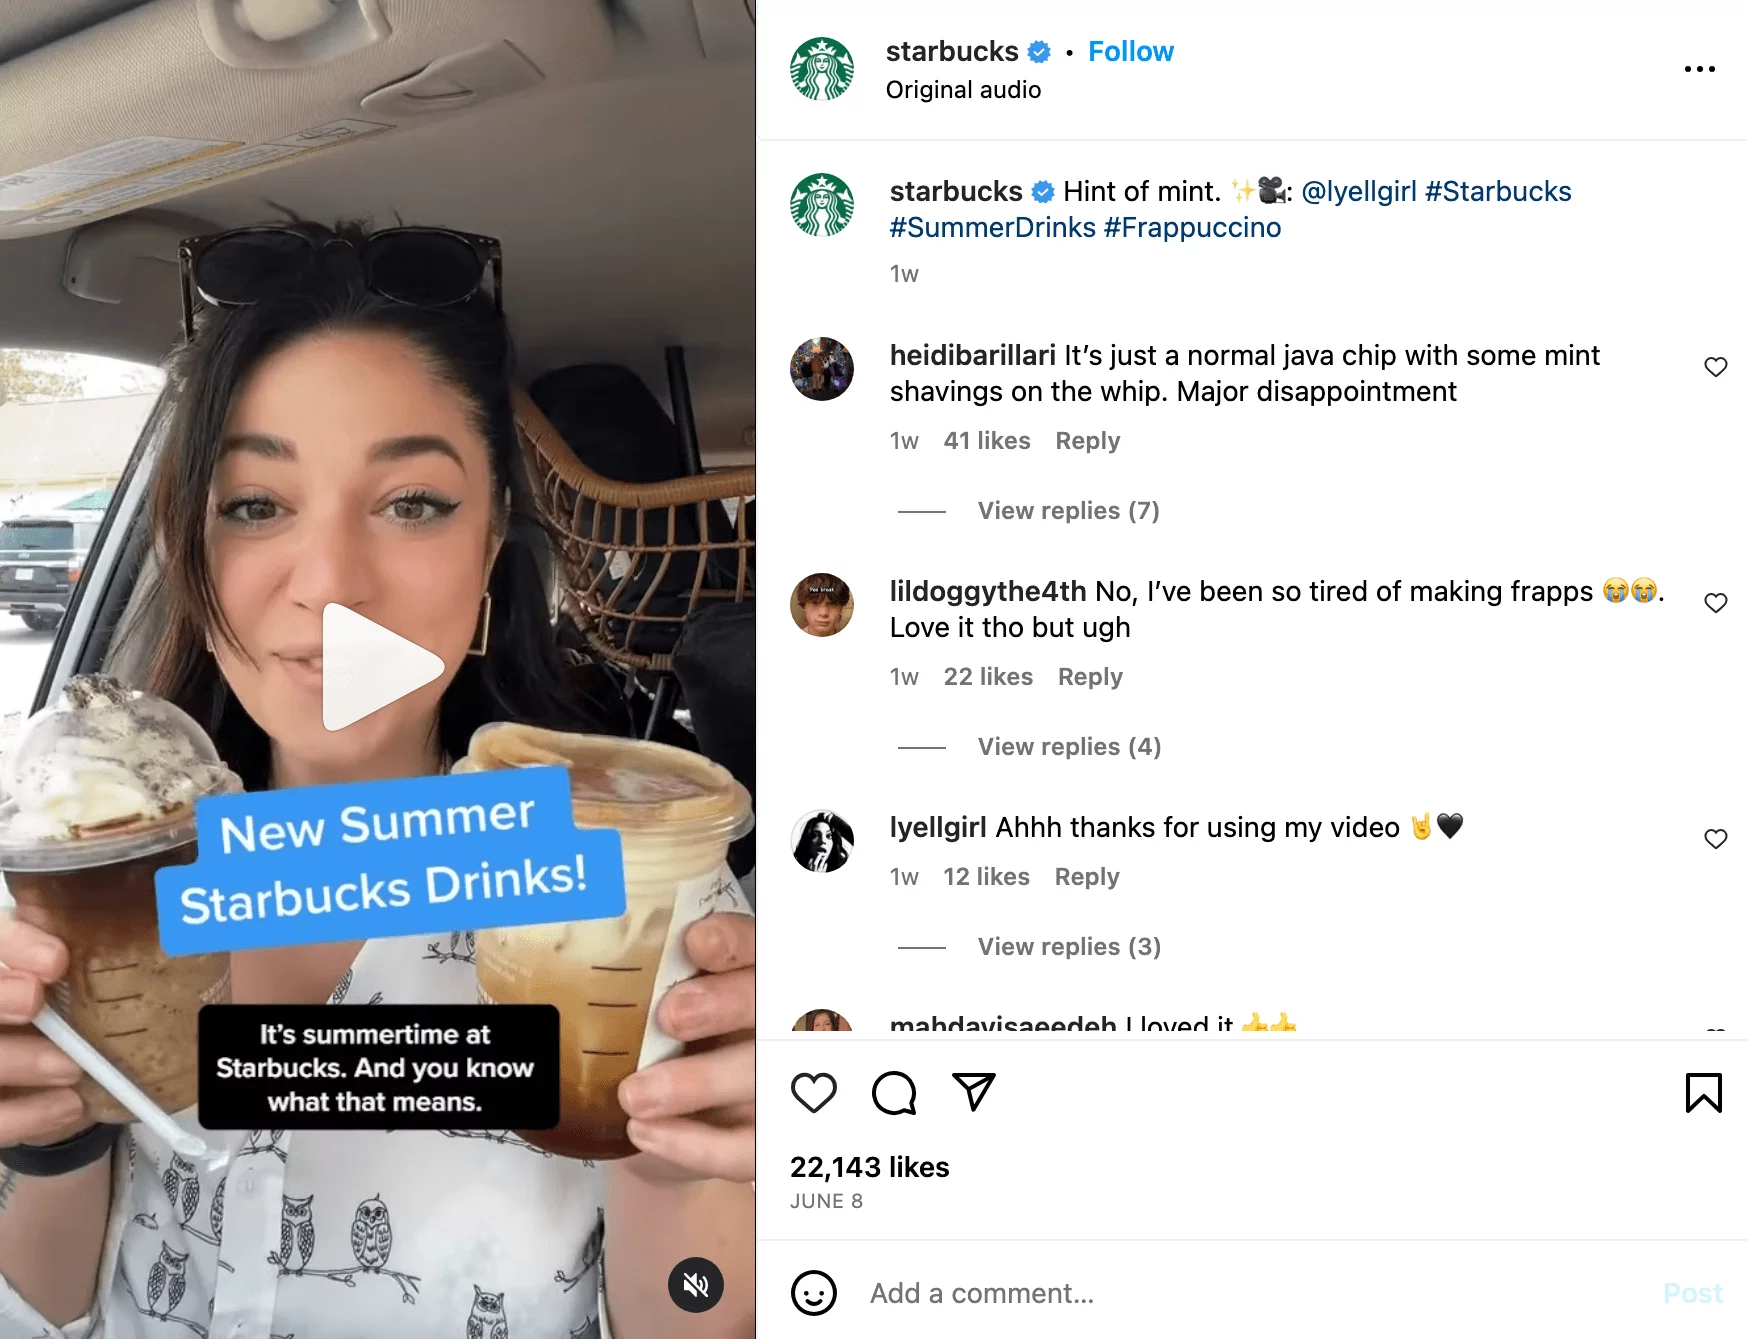 Instagram video post from @starbucks showing a girl tasting Starbucks drinks in a car.